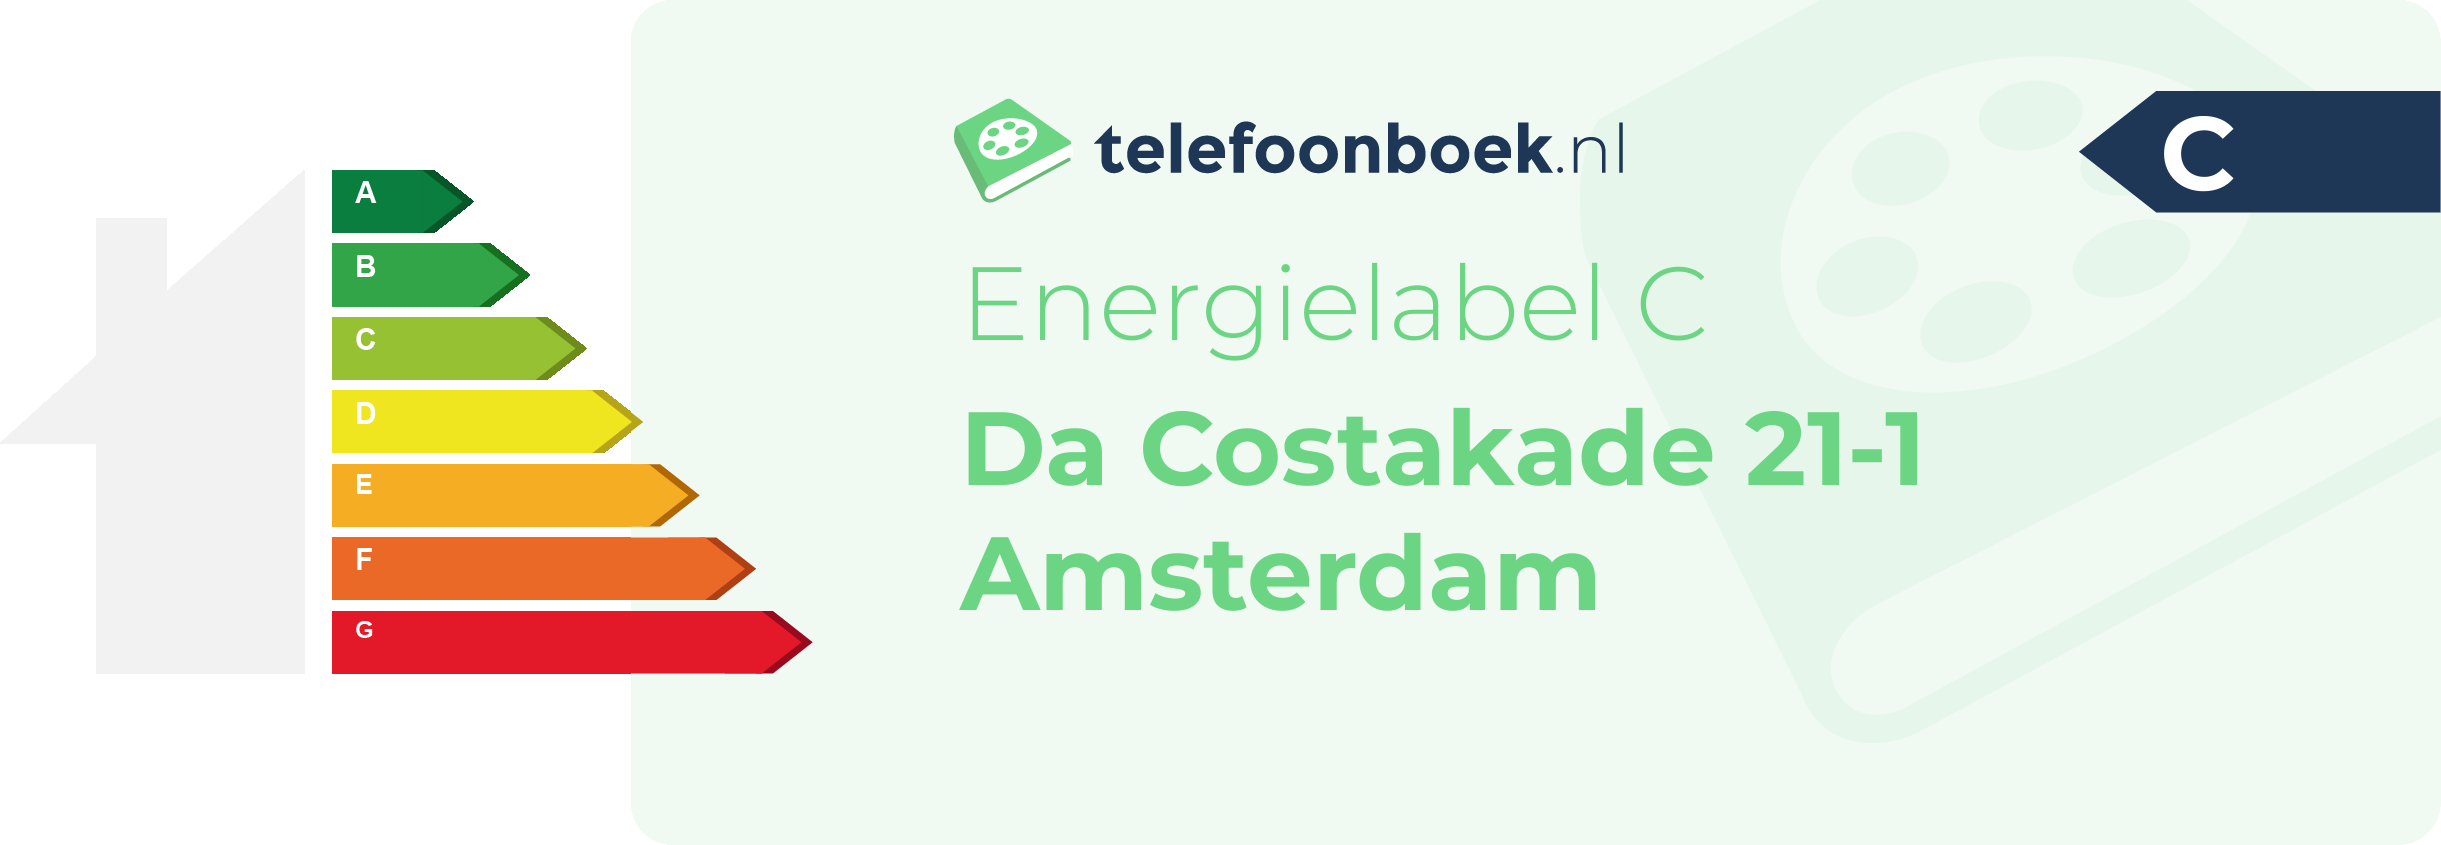 Energielabel Da Costakade 21-1 Amsterdam